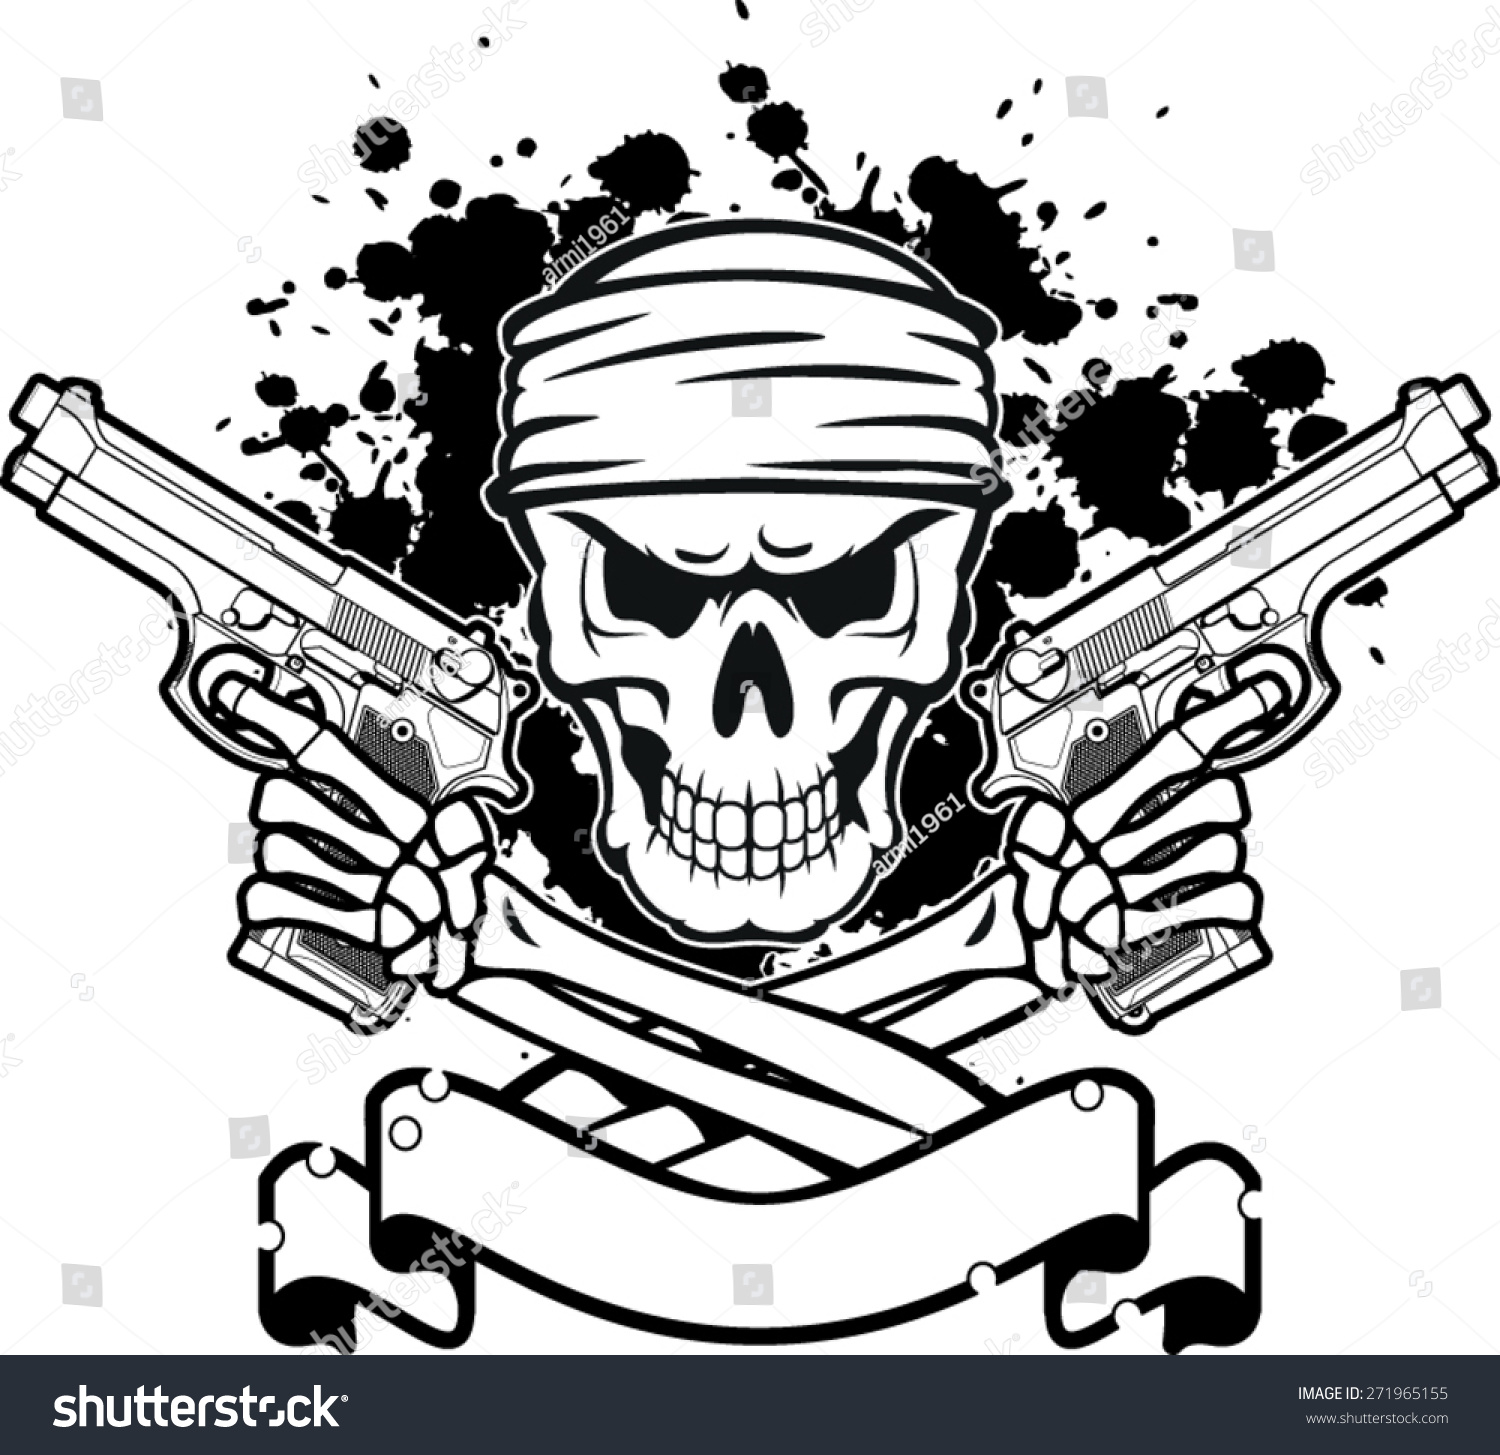 Skull With Bandana, Pistols And Banner Stock Vector Illustration ...